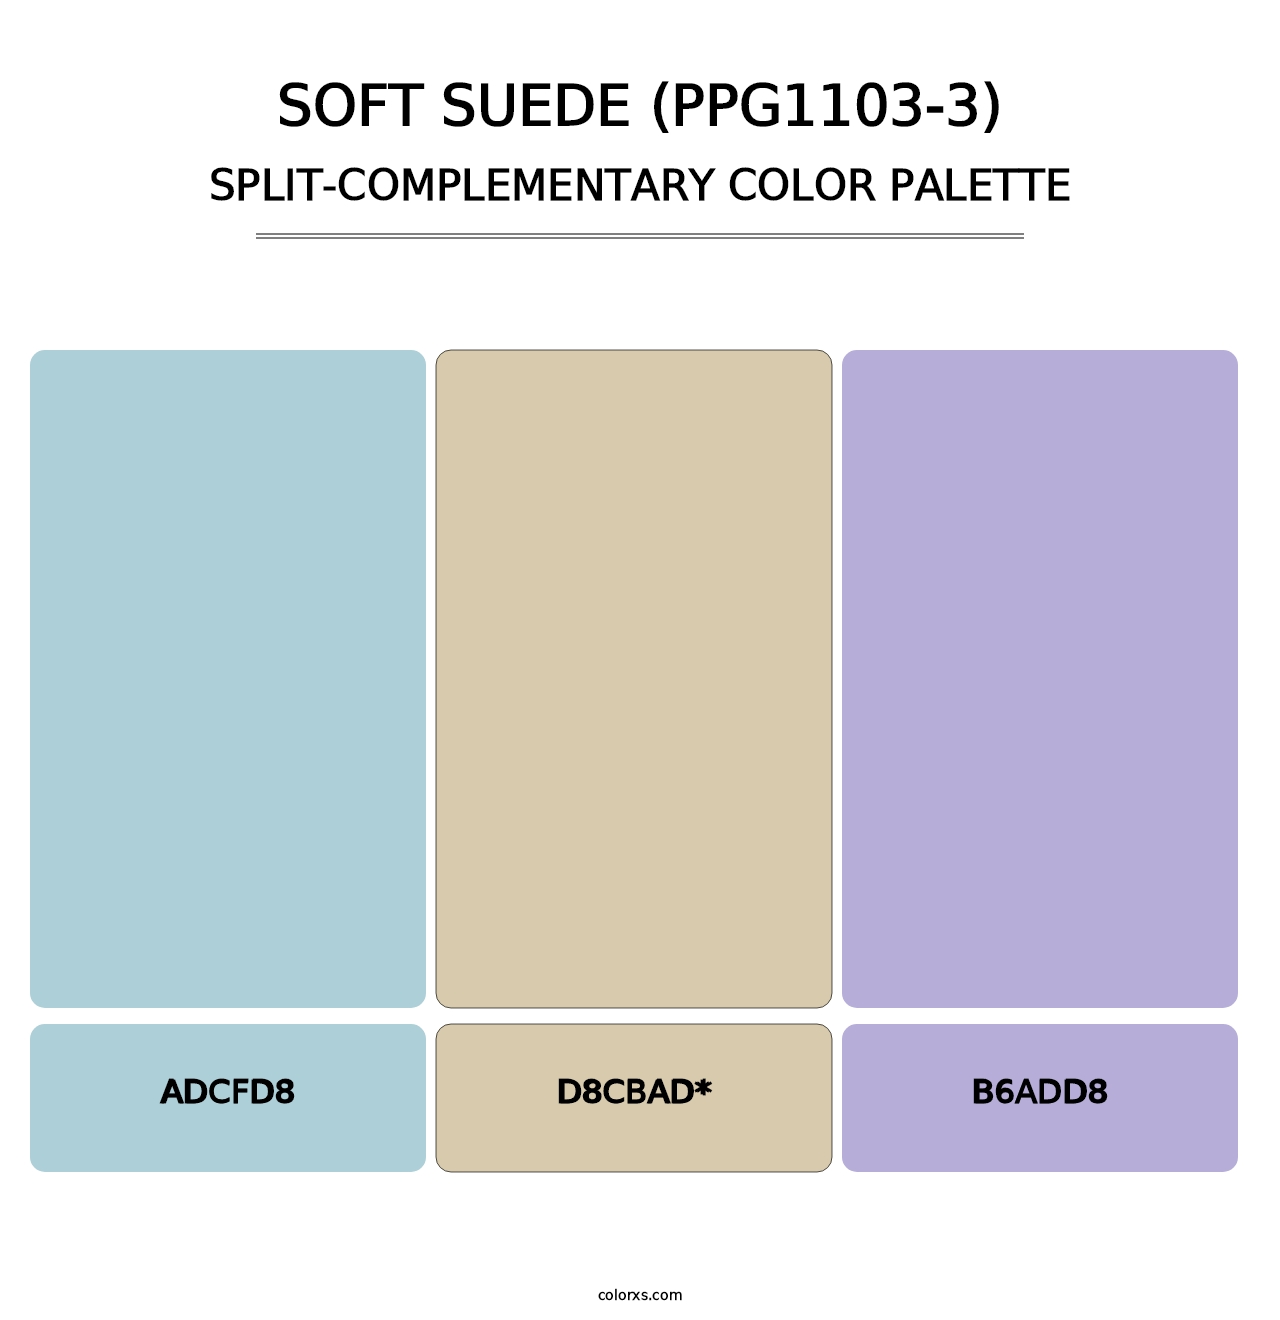 Soft Suede (PPG1103-3) - Split-Complementary Color Palette